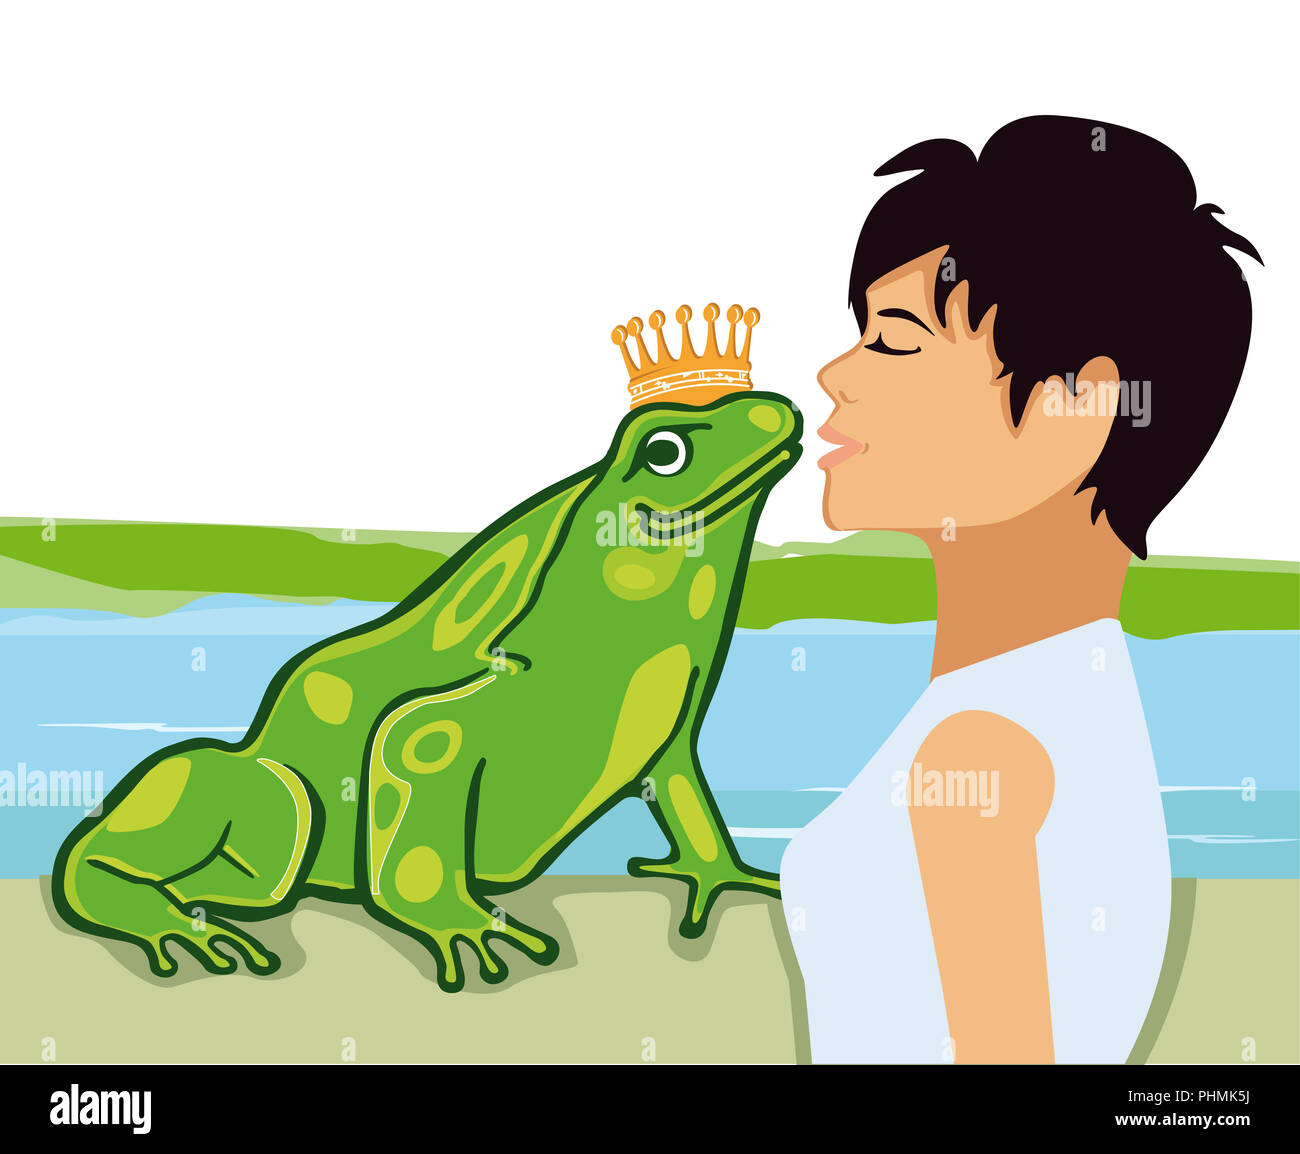 https://c8.alamy.com/comp/PHMK5J/kiss-the-frog-prince-illustration-PHMK5J.jpg